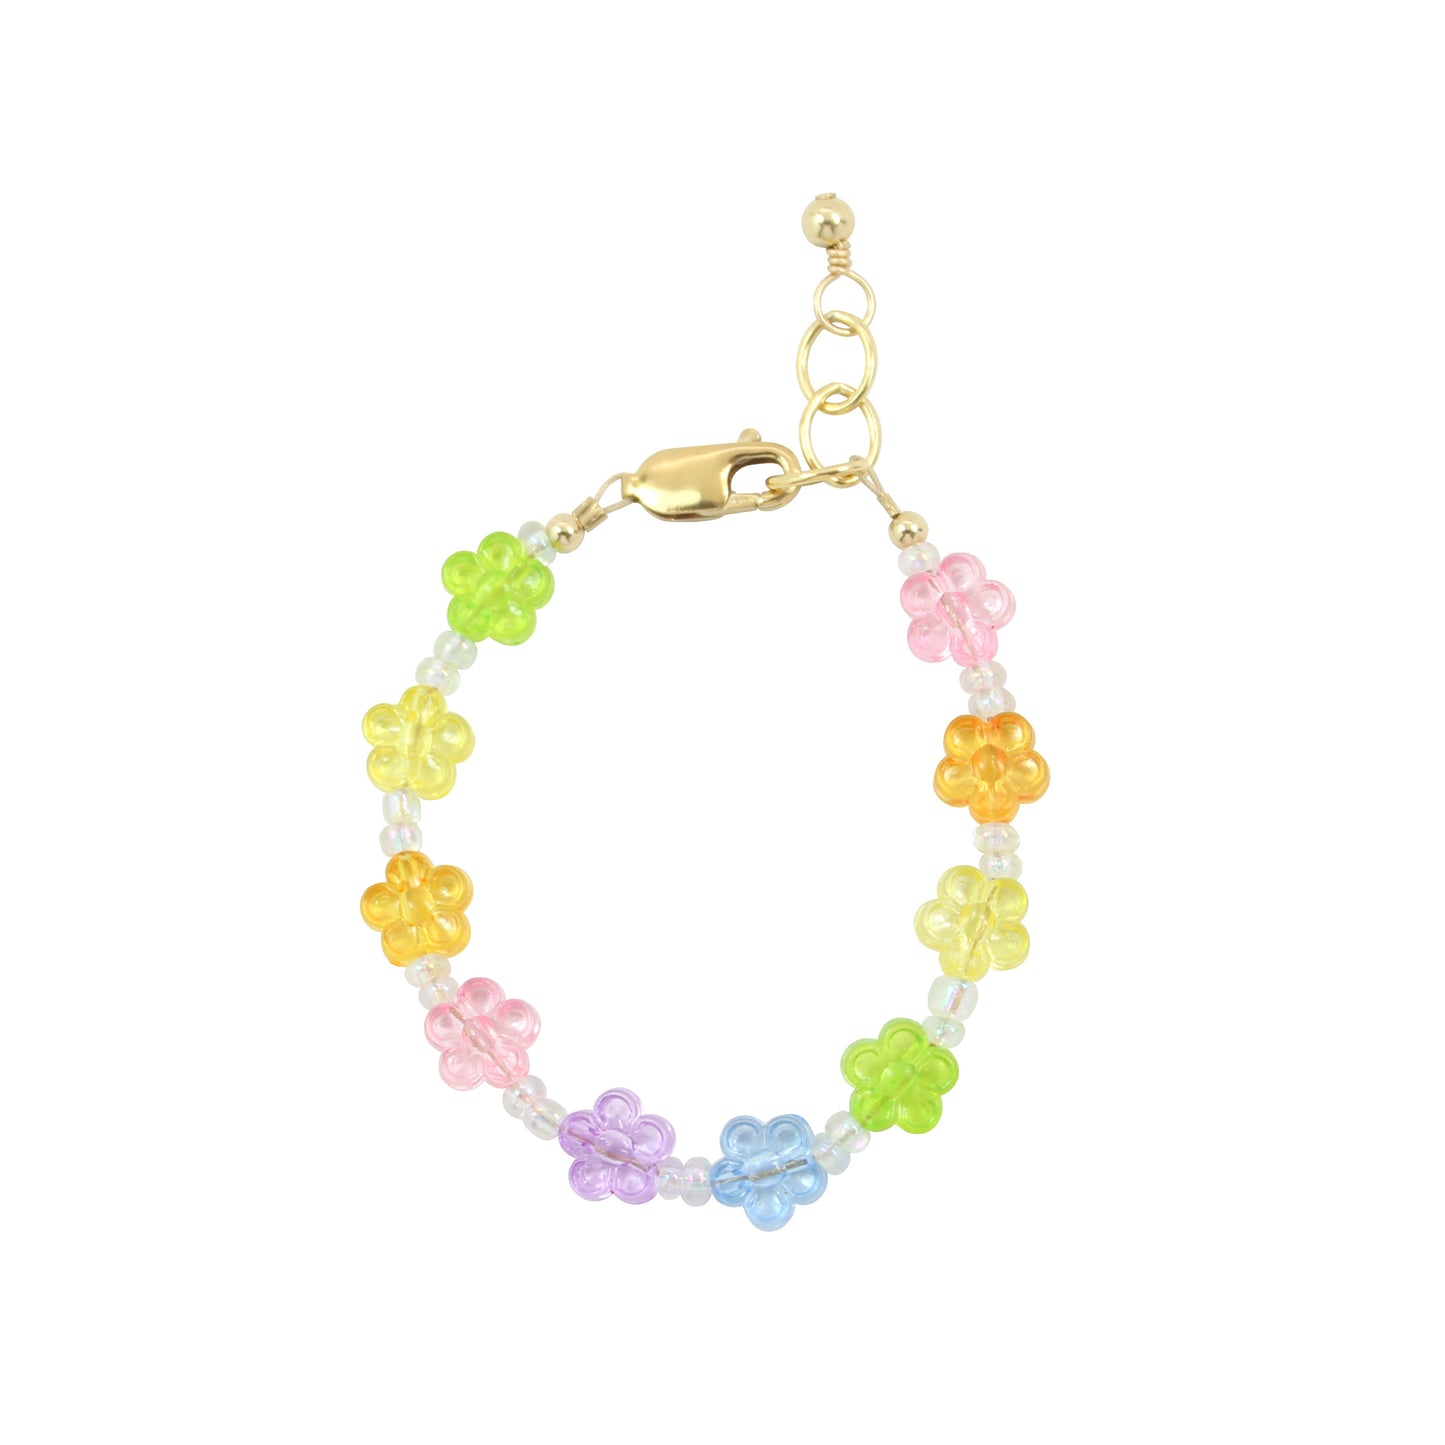 Rainbow Adult Chain Bracelet (4MM beads)